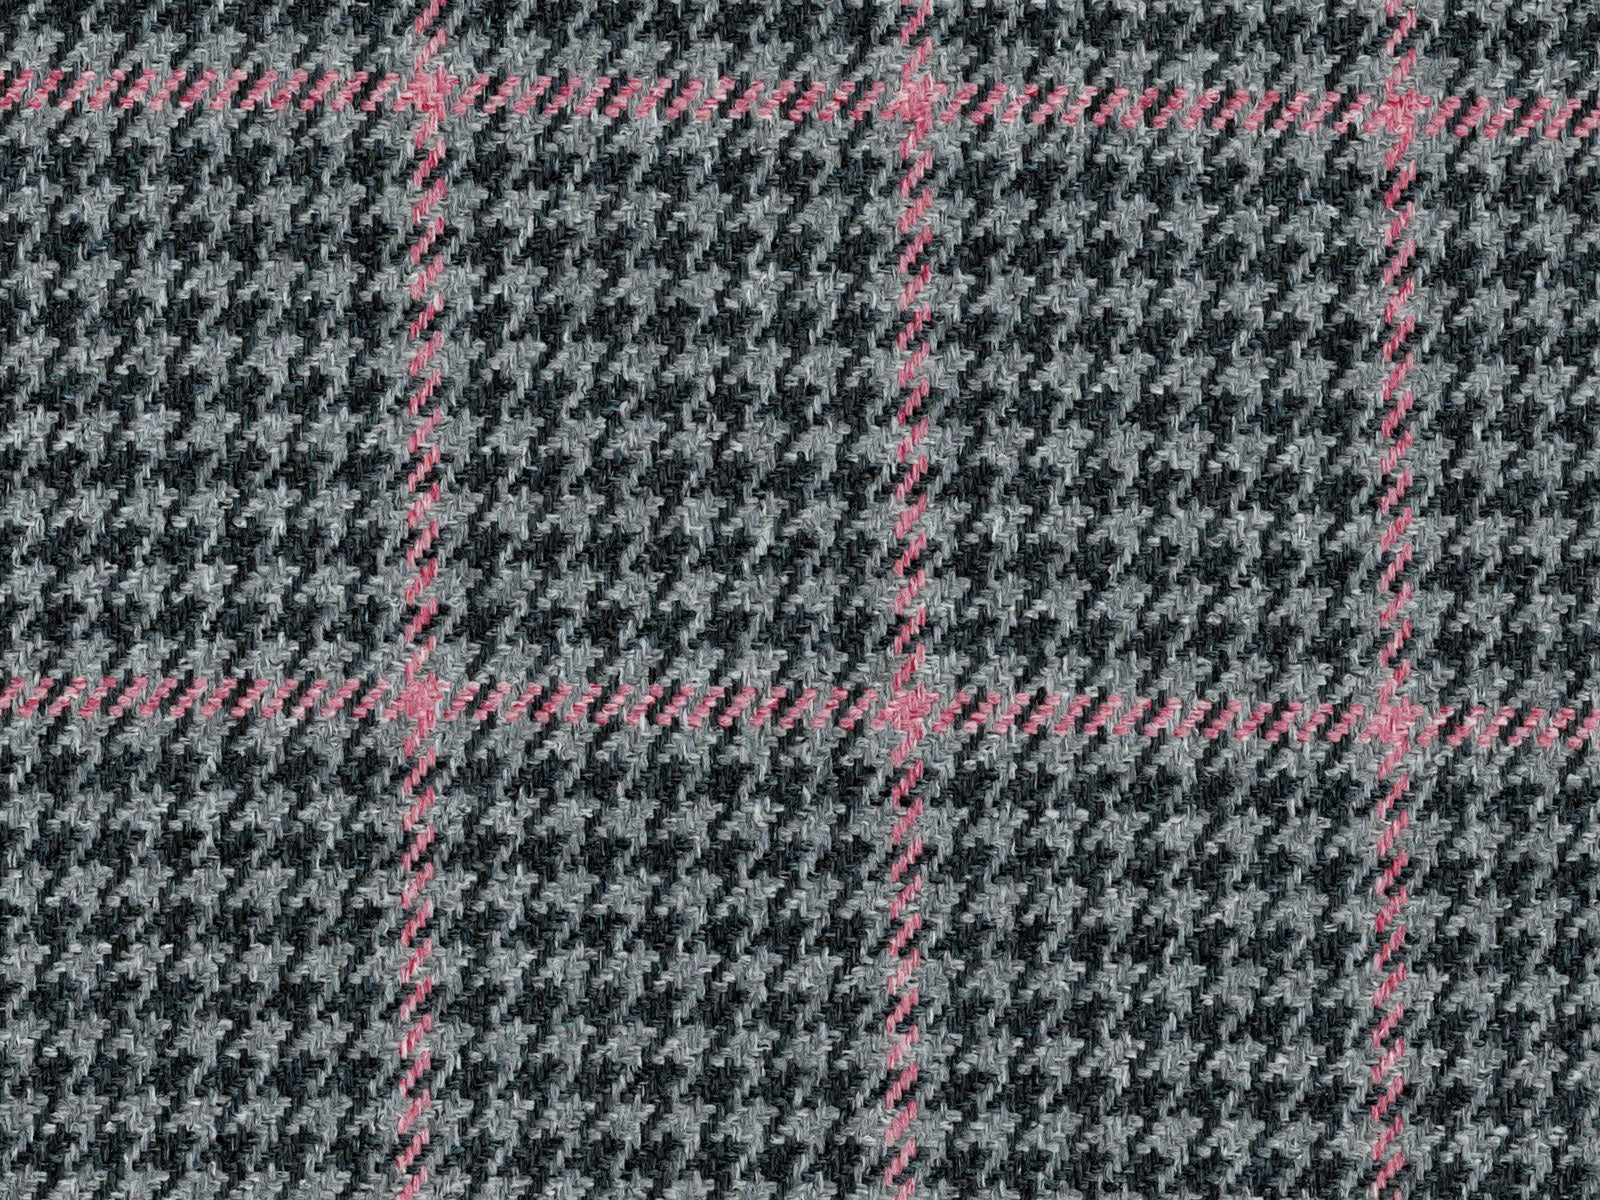 Bologna Fabric Samples - Rydan Interiors